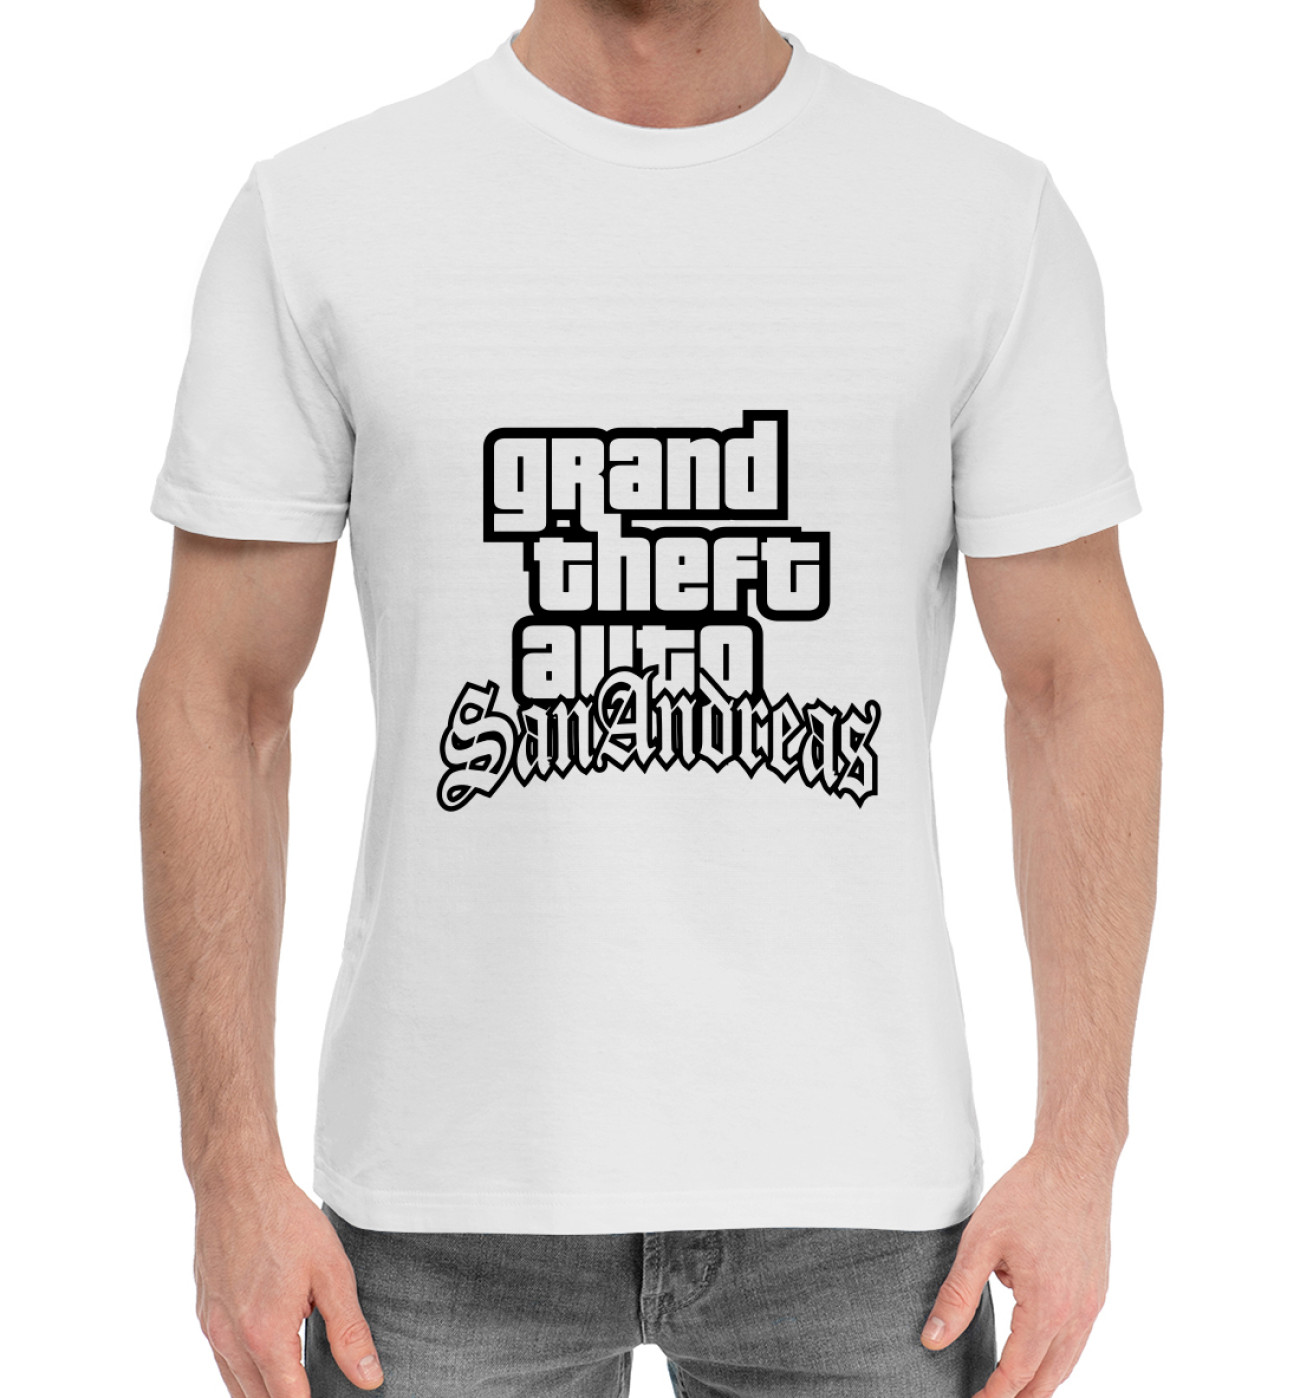 Мужская Хлопковая футболка Rockstar Games, артикул: ROC-673779-hfu-2